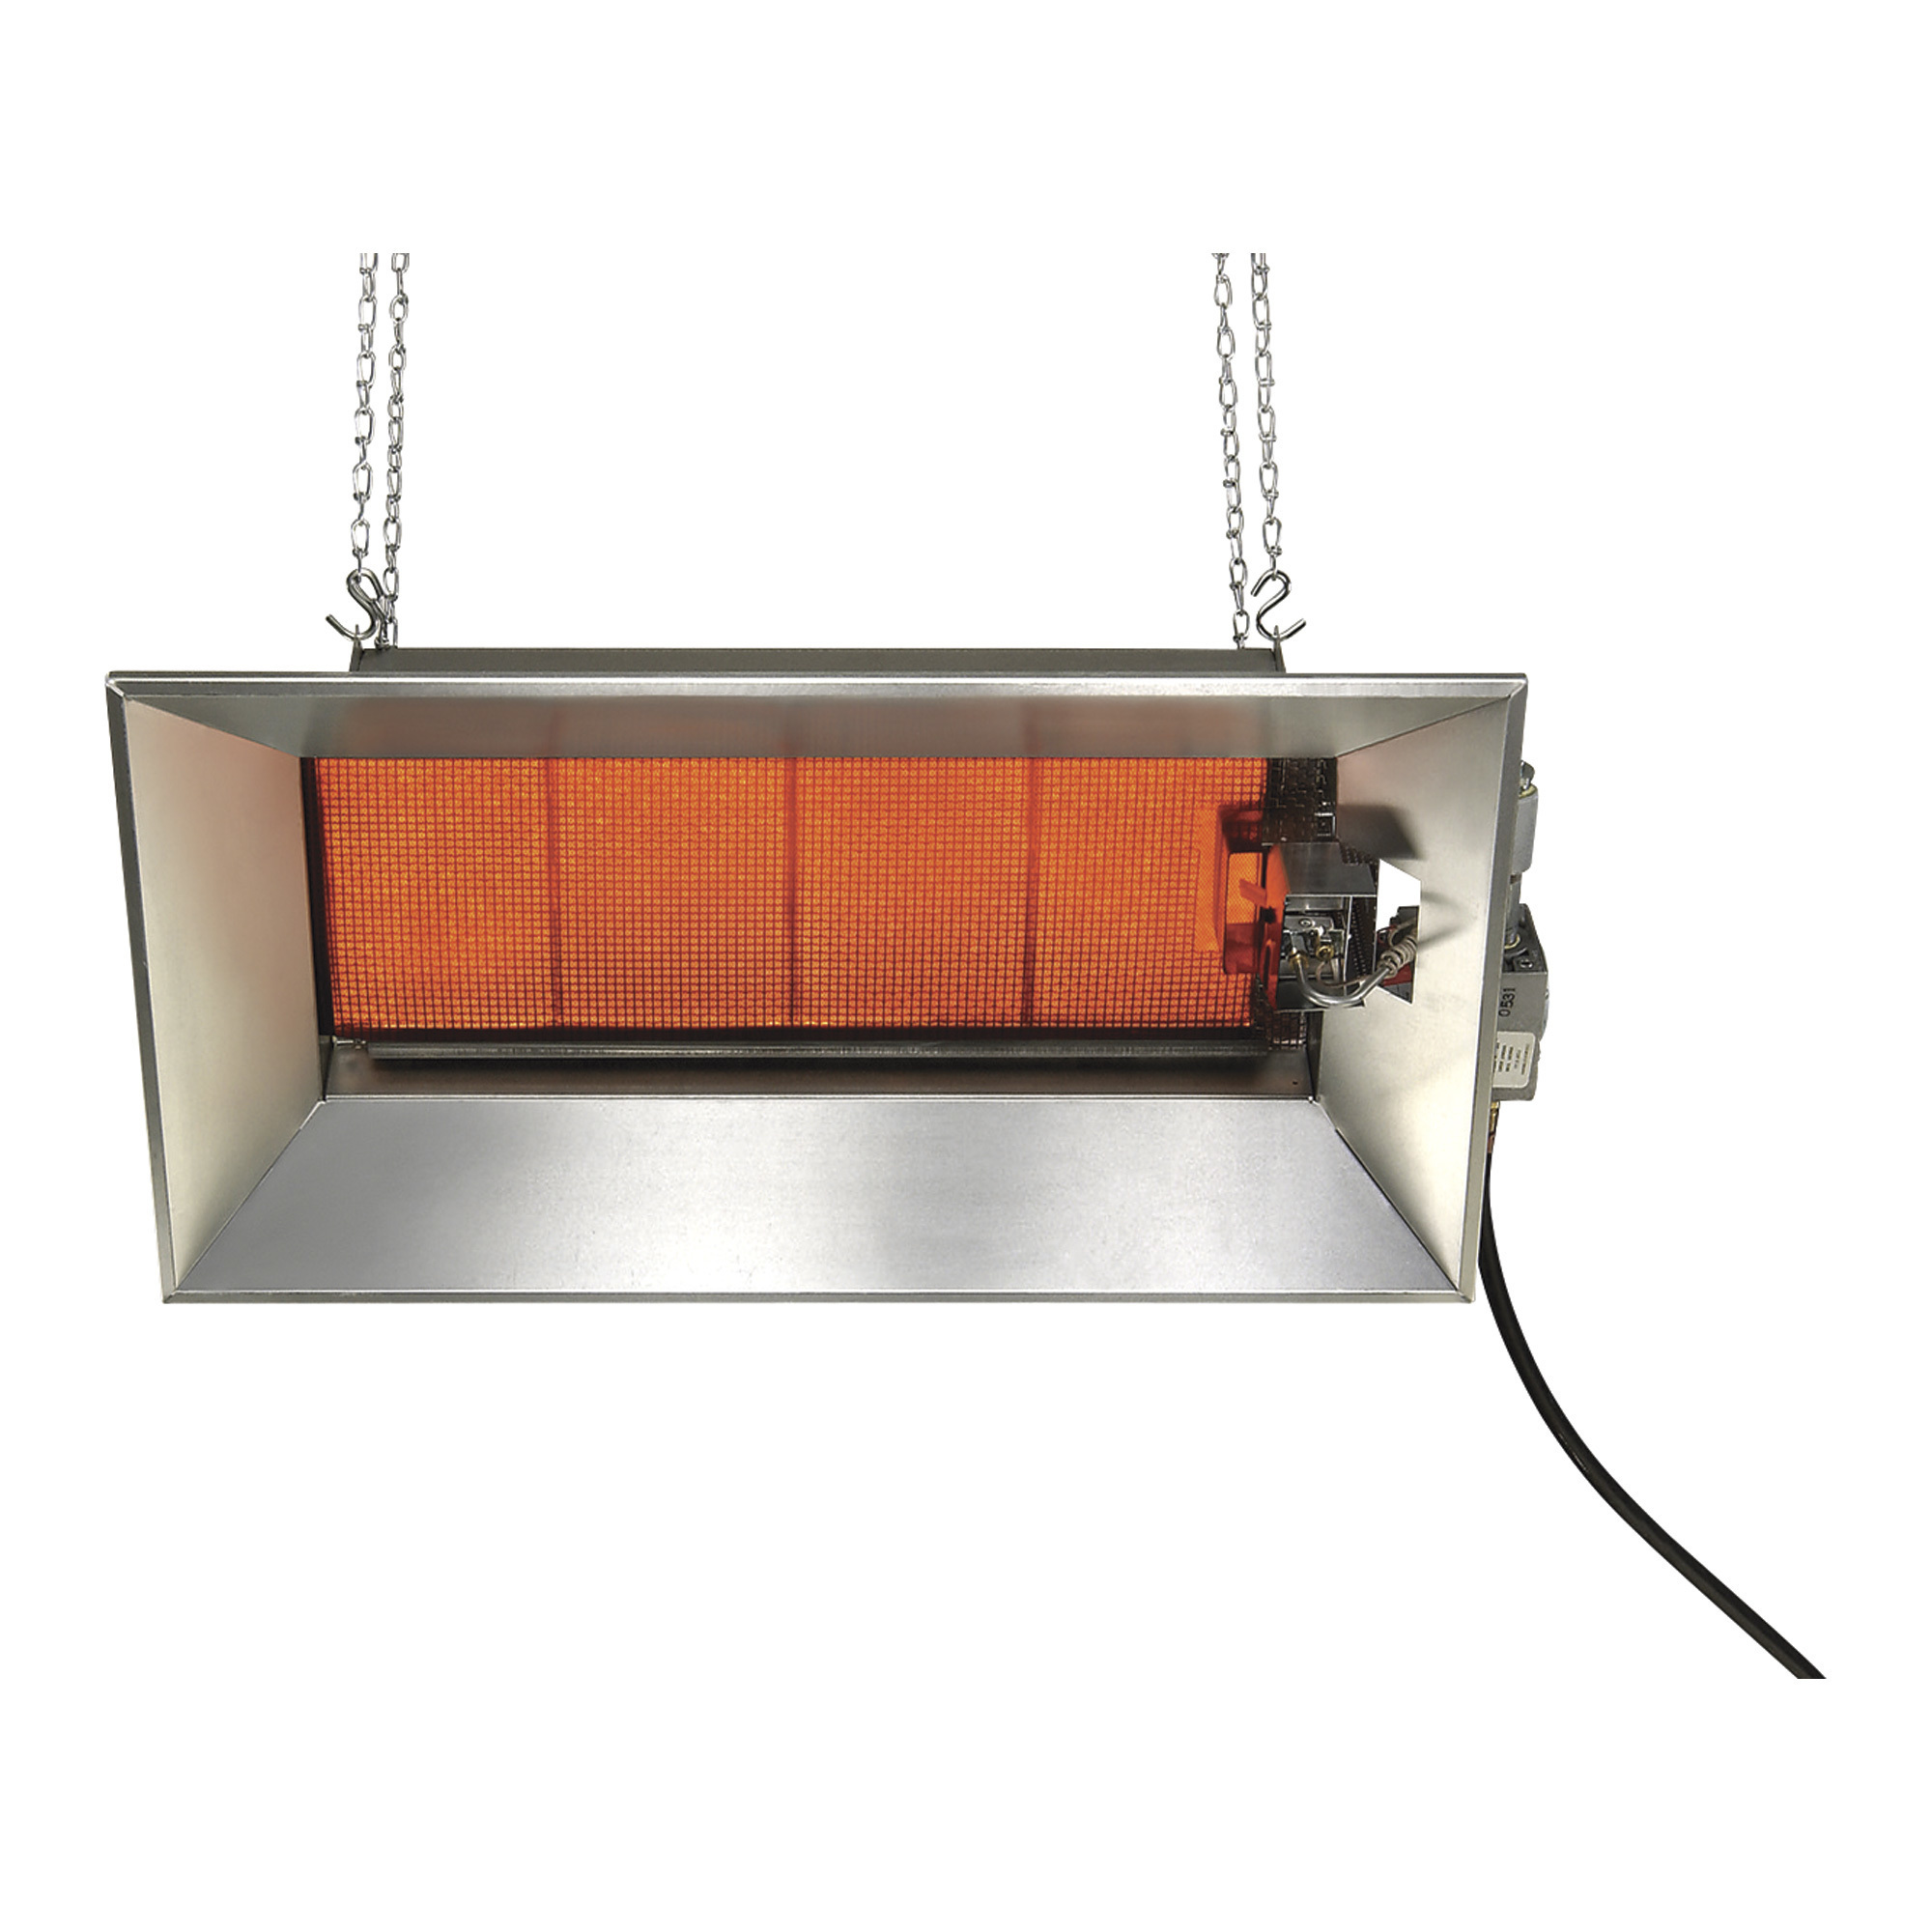 SunStar Heating Products Infrared Ceramic Heater, Natural Gas, 52,000 BTU, Model SGM6-N1A